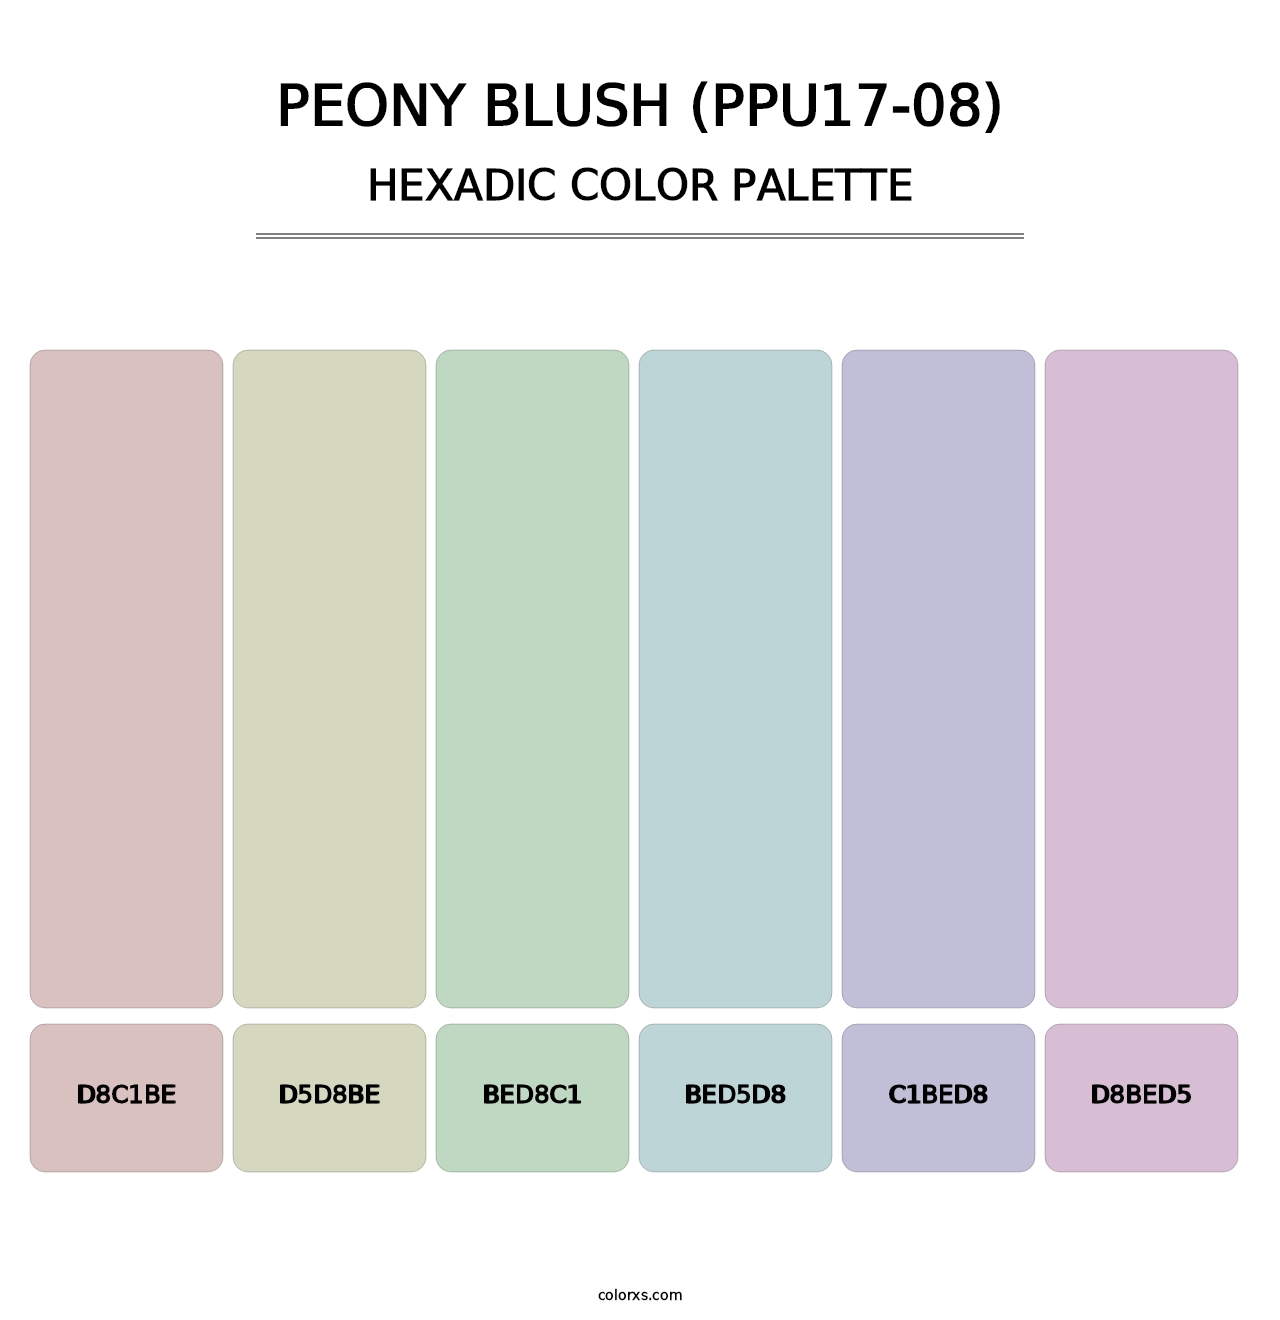 Peony Blush (PPU17-08) - Hexadic Color Palette